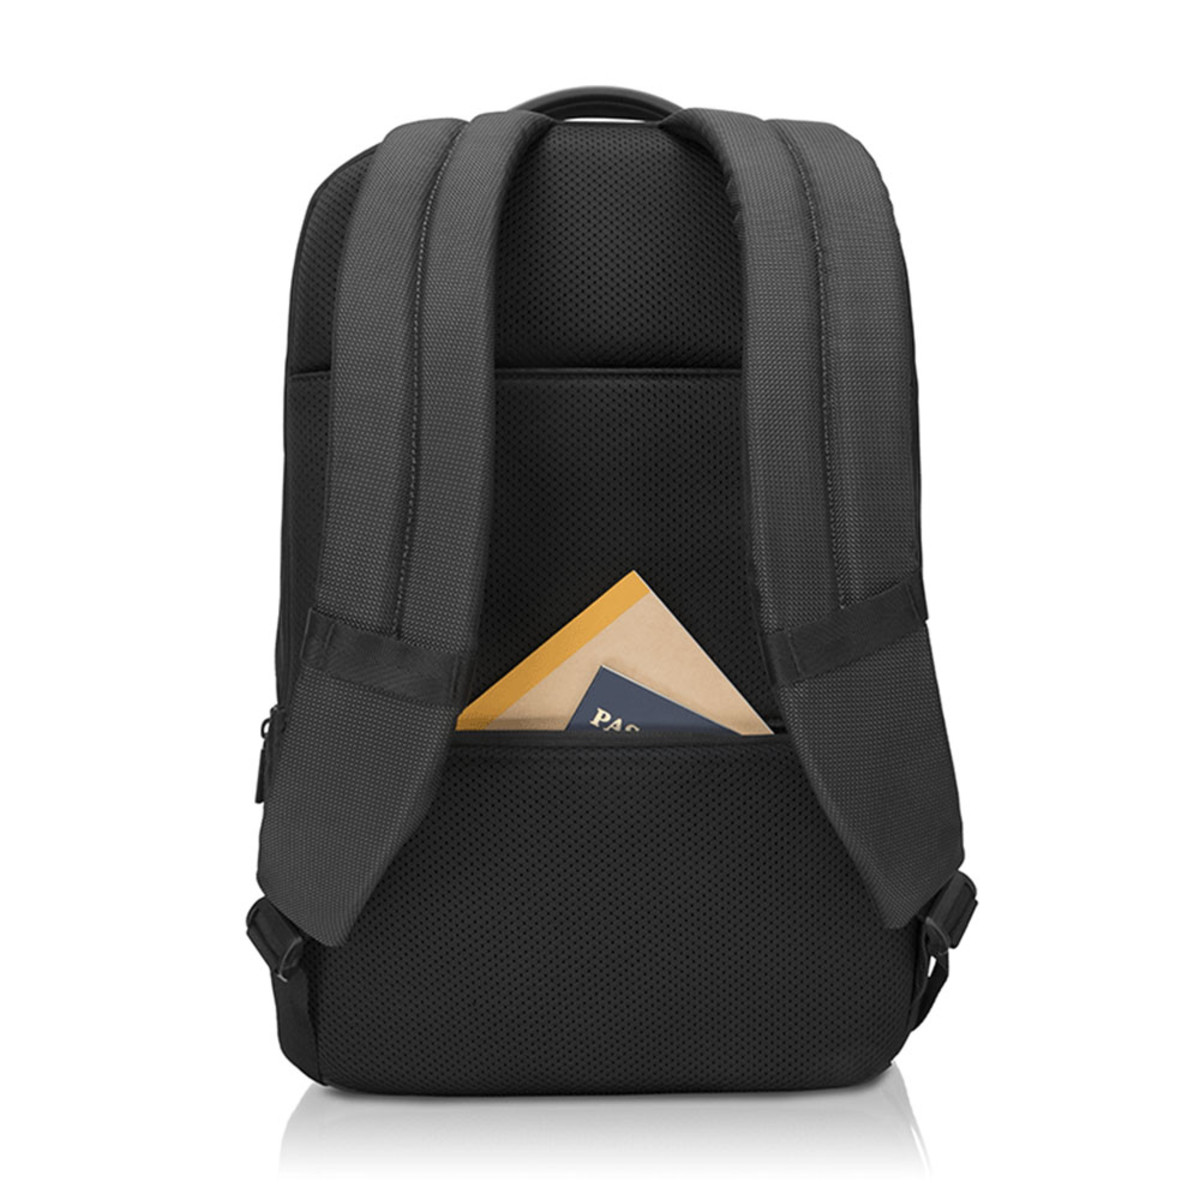 ThinkPad Professional 15.6 Backpack